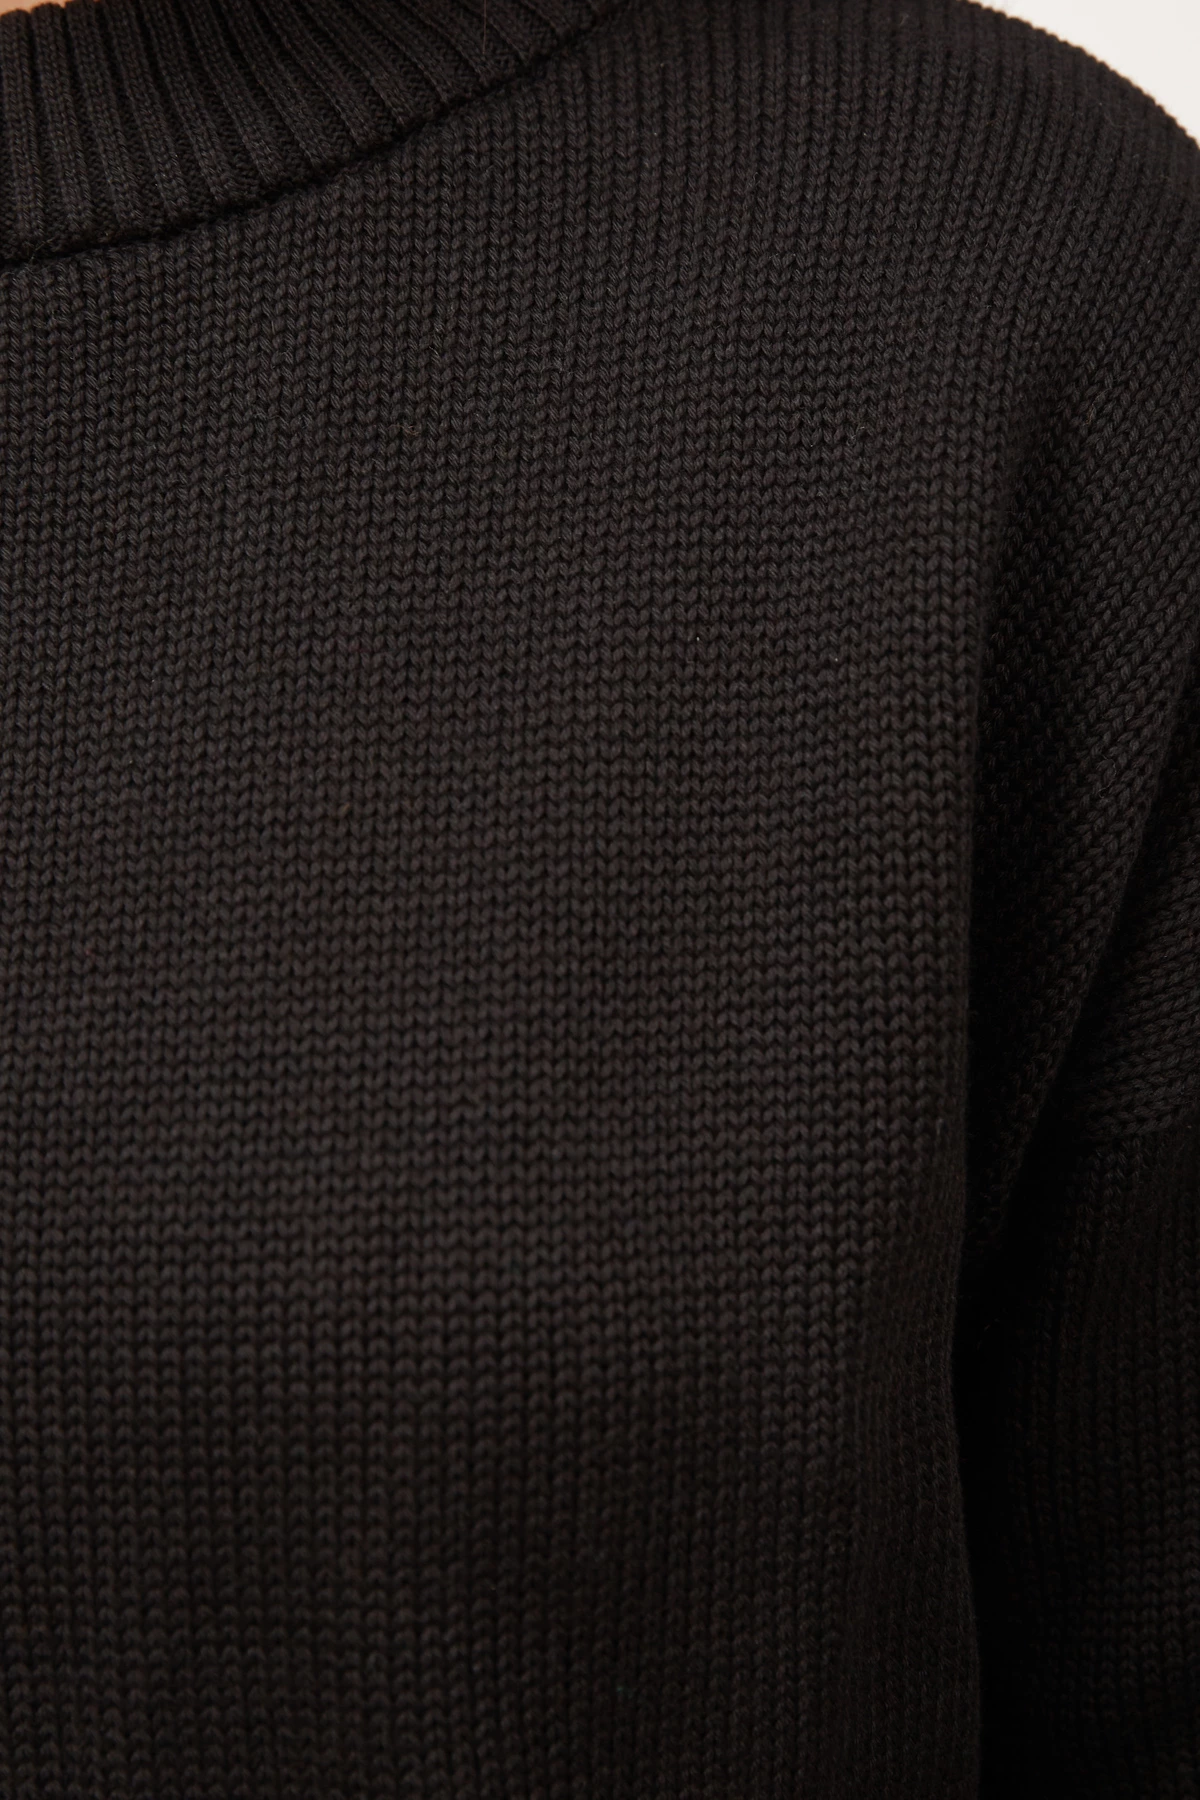 Black cotton sweater, photo 4